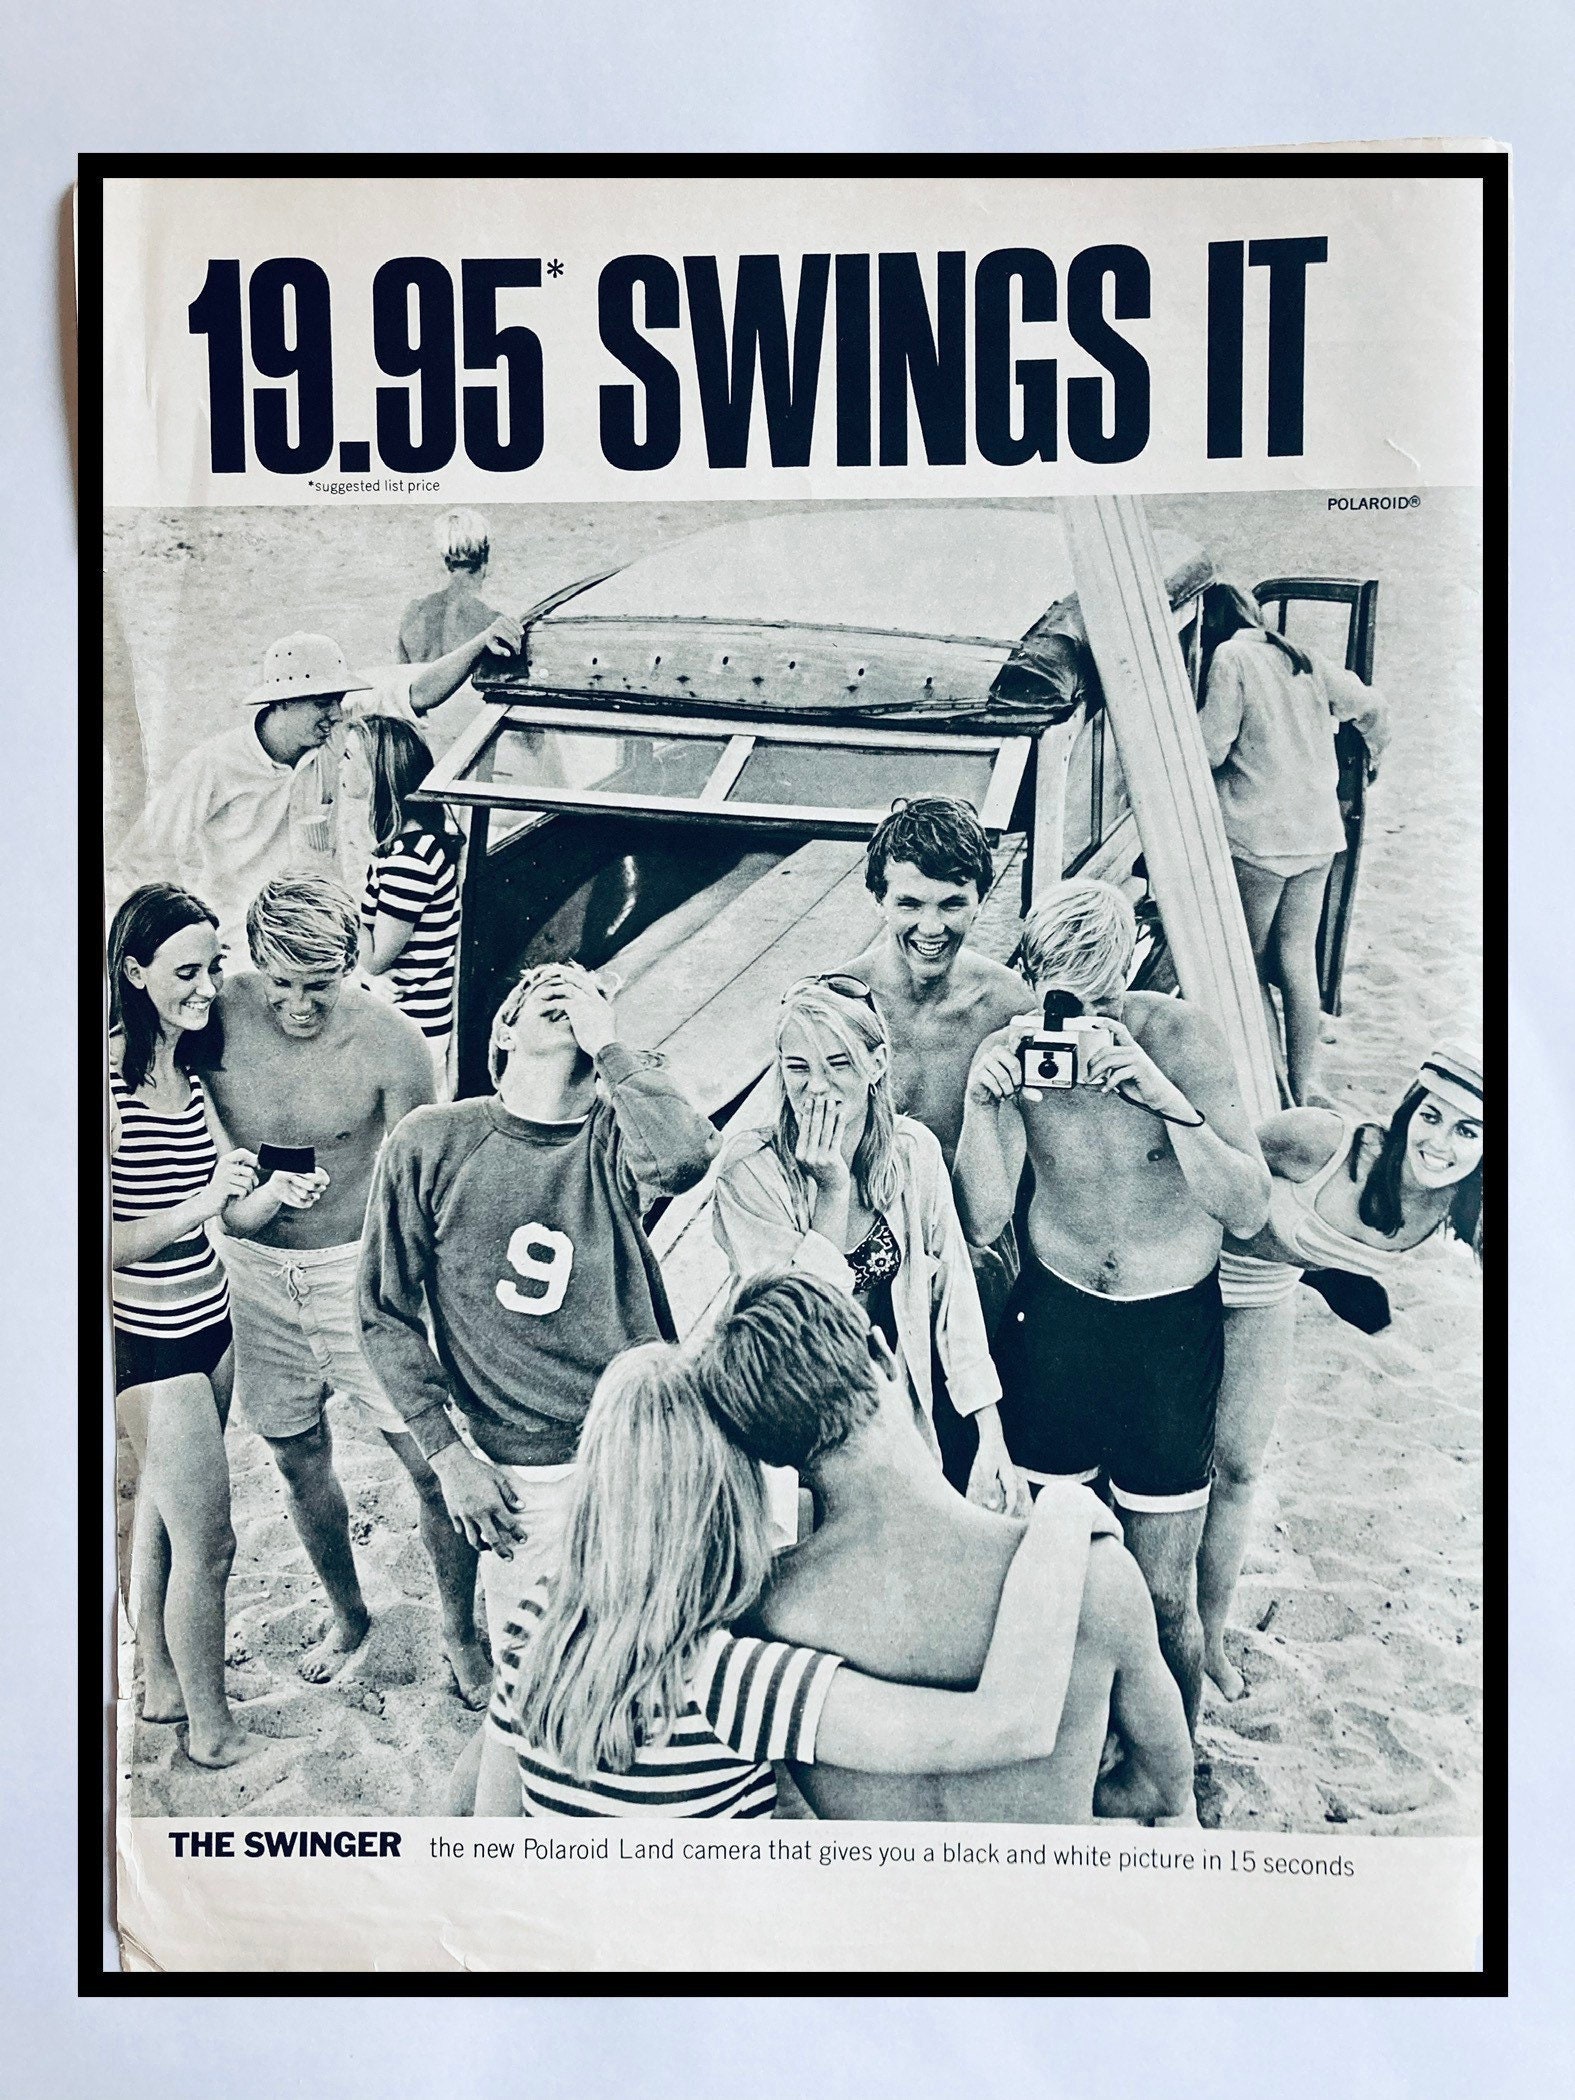 Vtg Polaroid Print Ad 1967 Swinger Camera 19.95 Swings It image